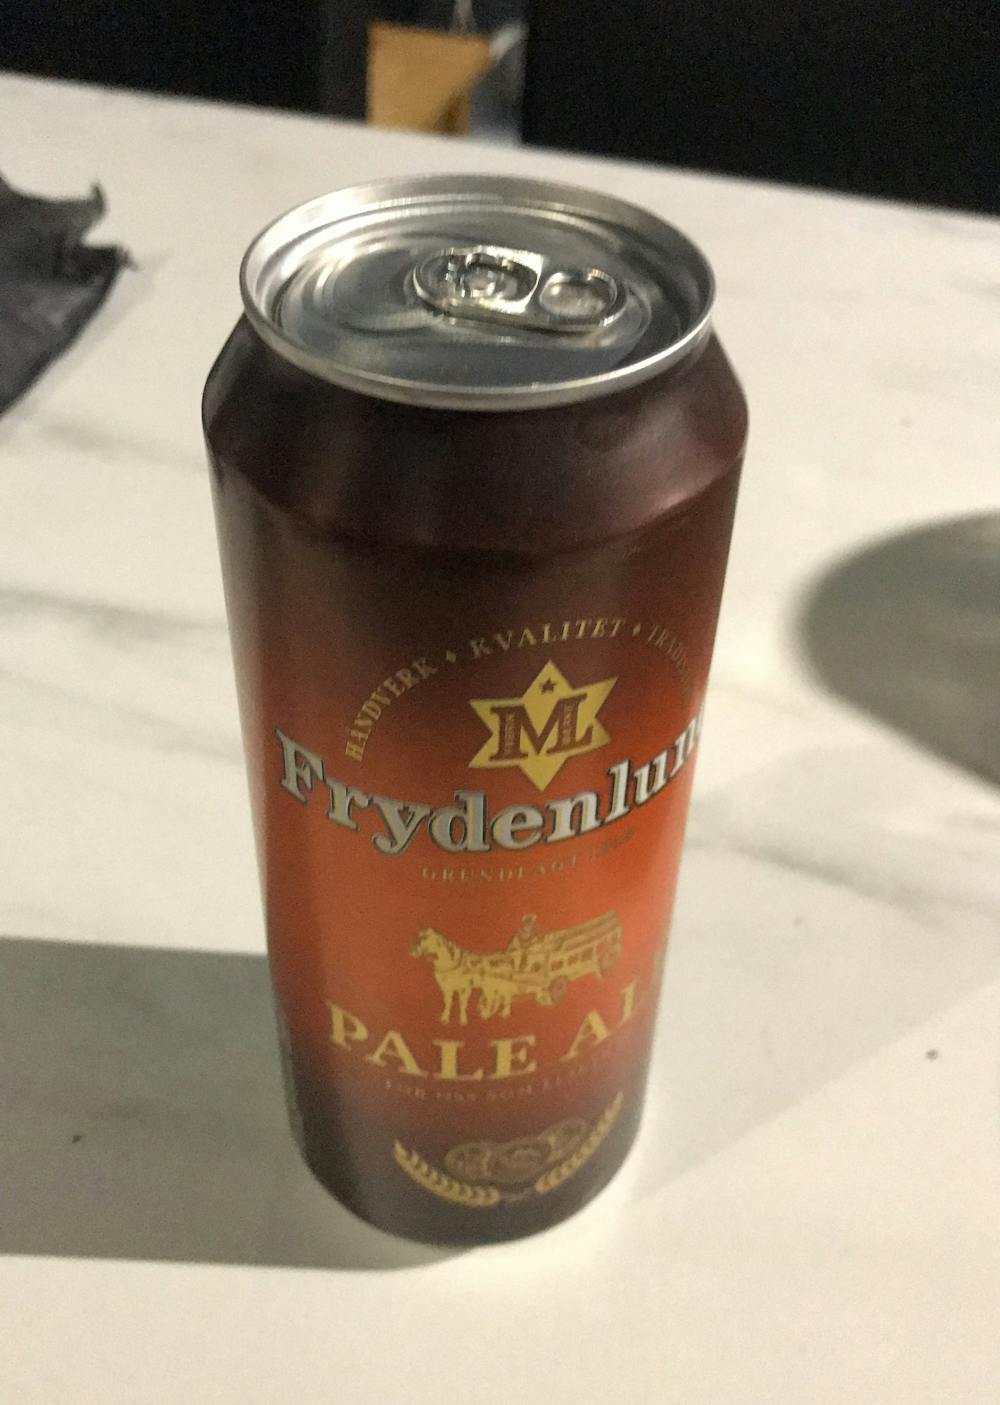 Pale ale, Frydenlund